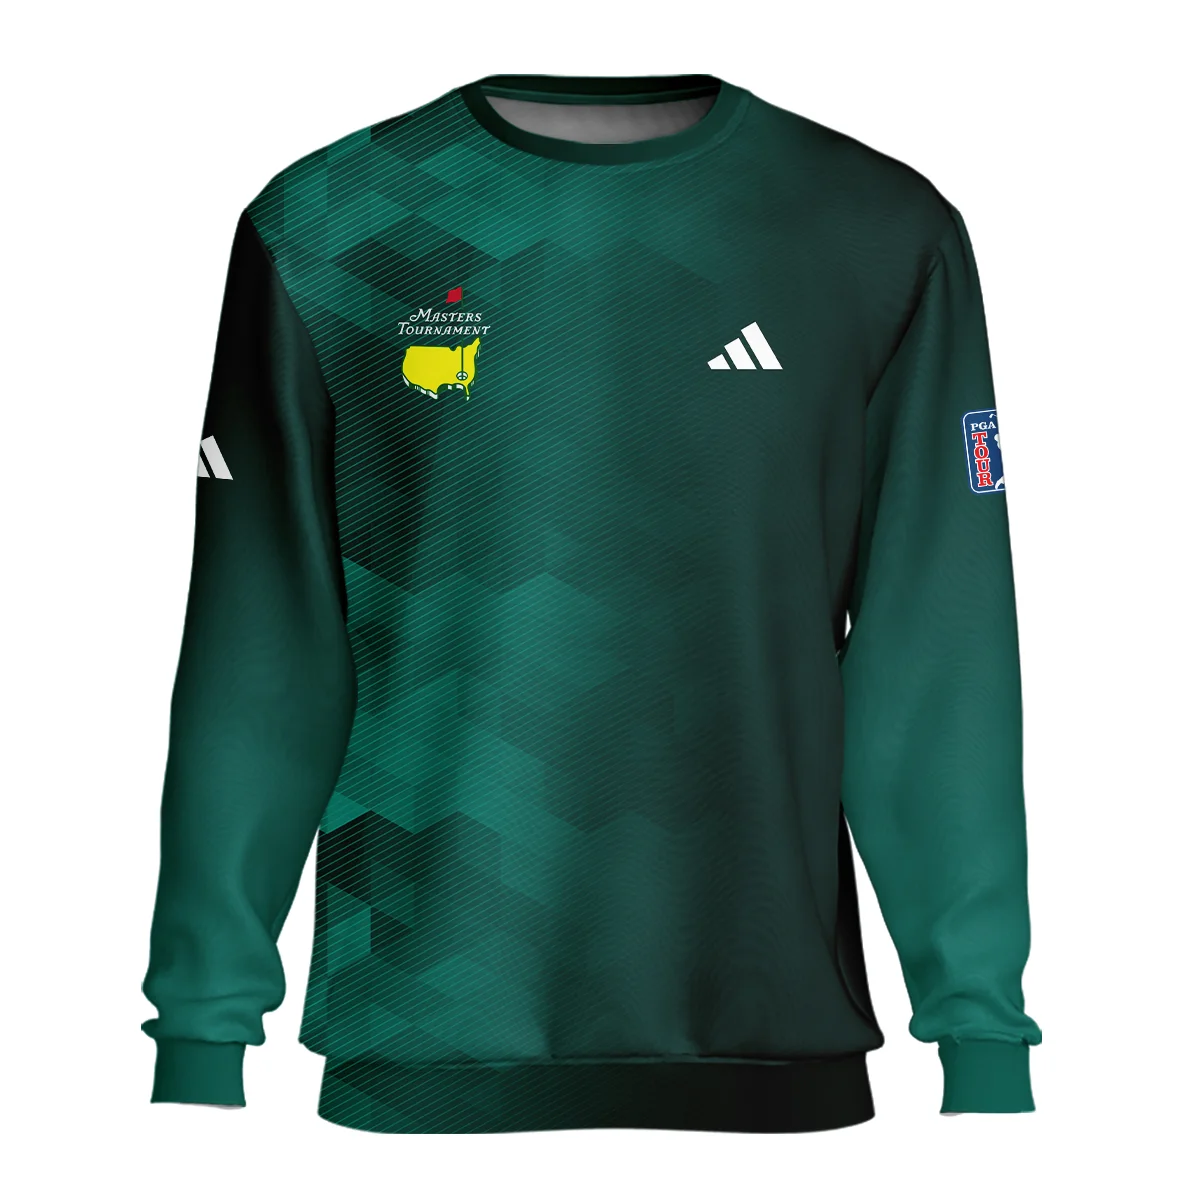 Adidas Golf Sport Dark Green Gradient Abstract Background Masters Tournament Unisex Sweatshirt Style Classic Sweatshirt